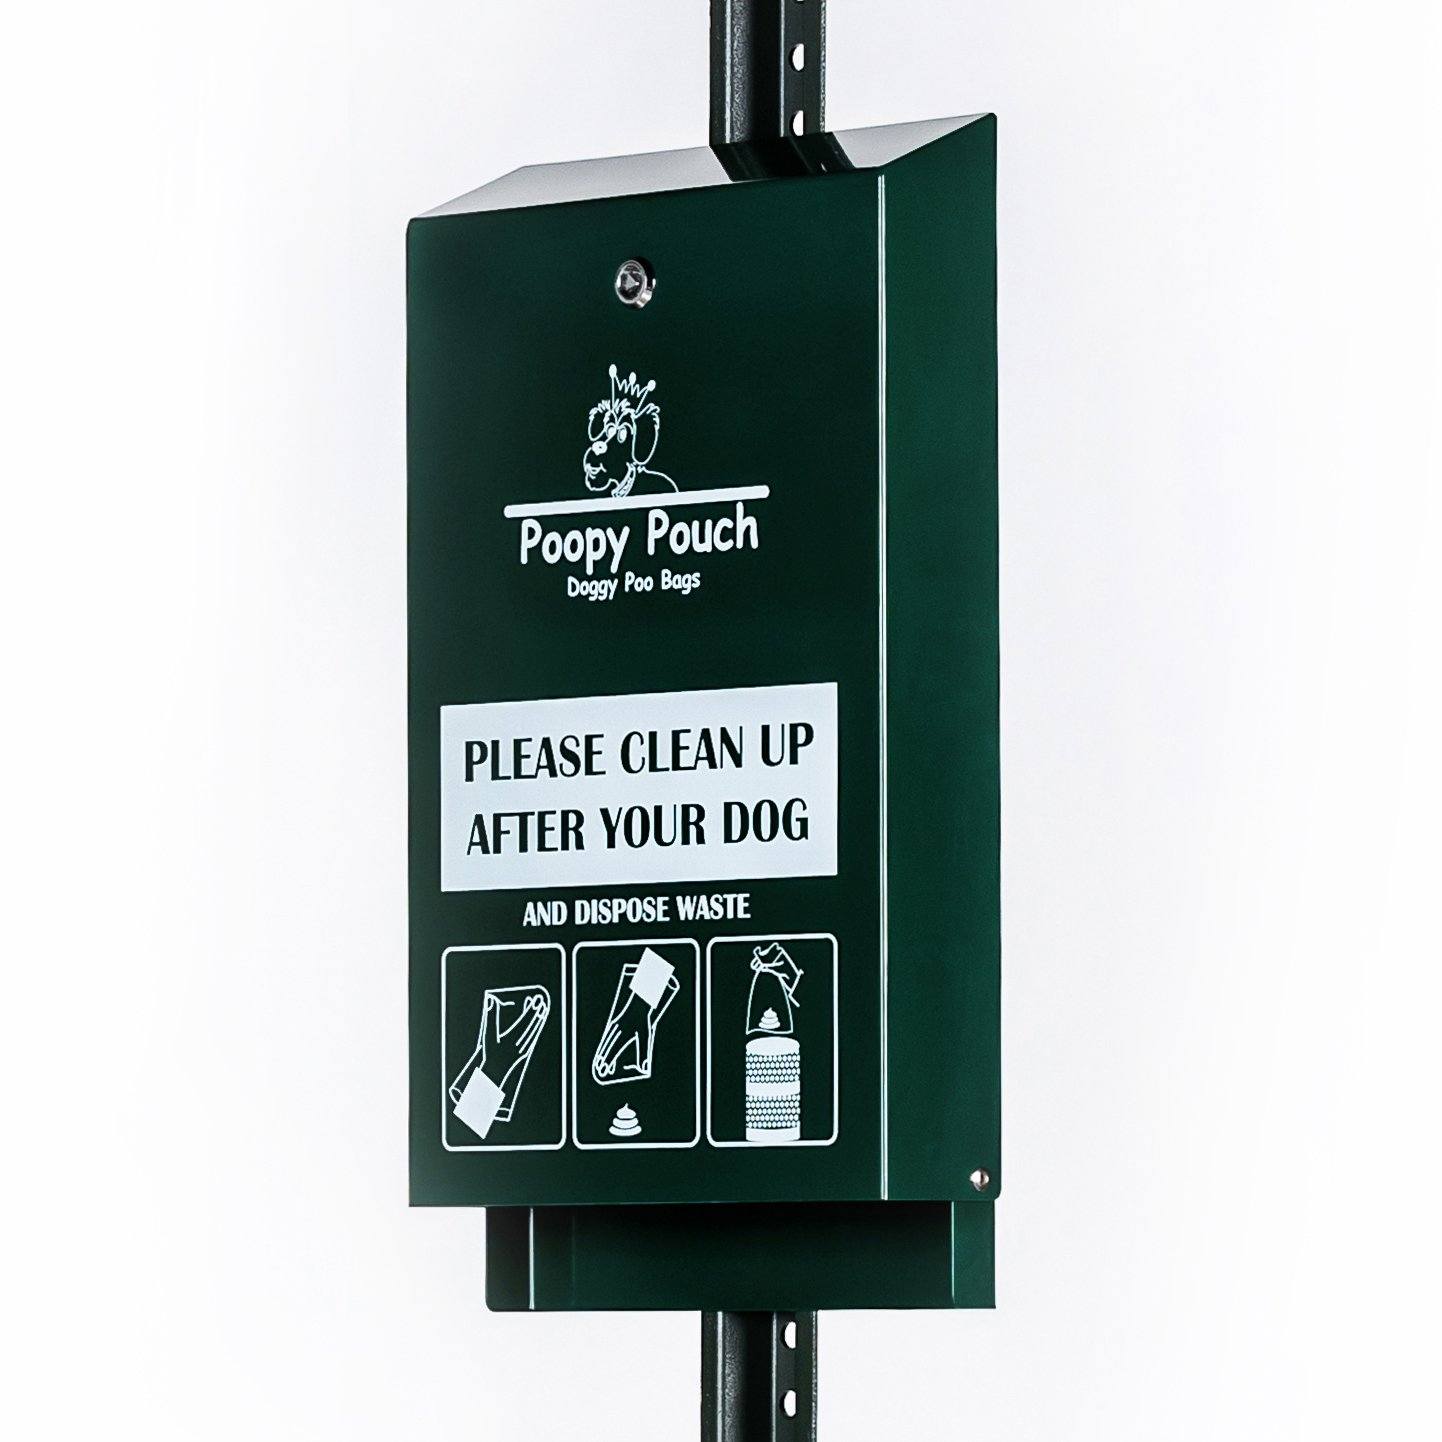 Poopy Pouch Regal Pet Waste Bag Dispenser